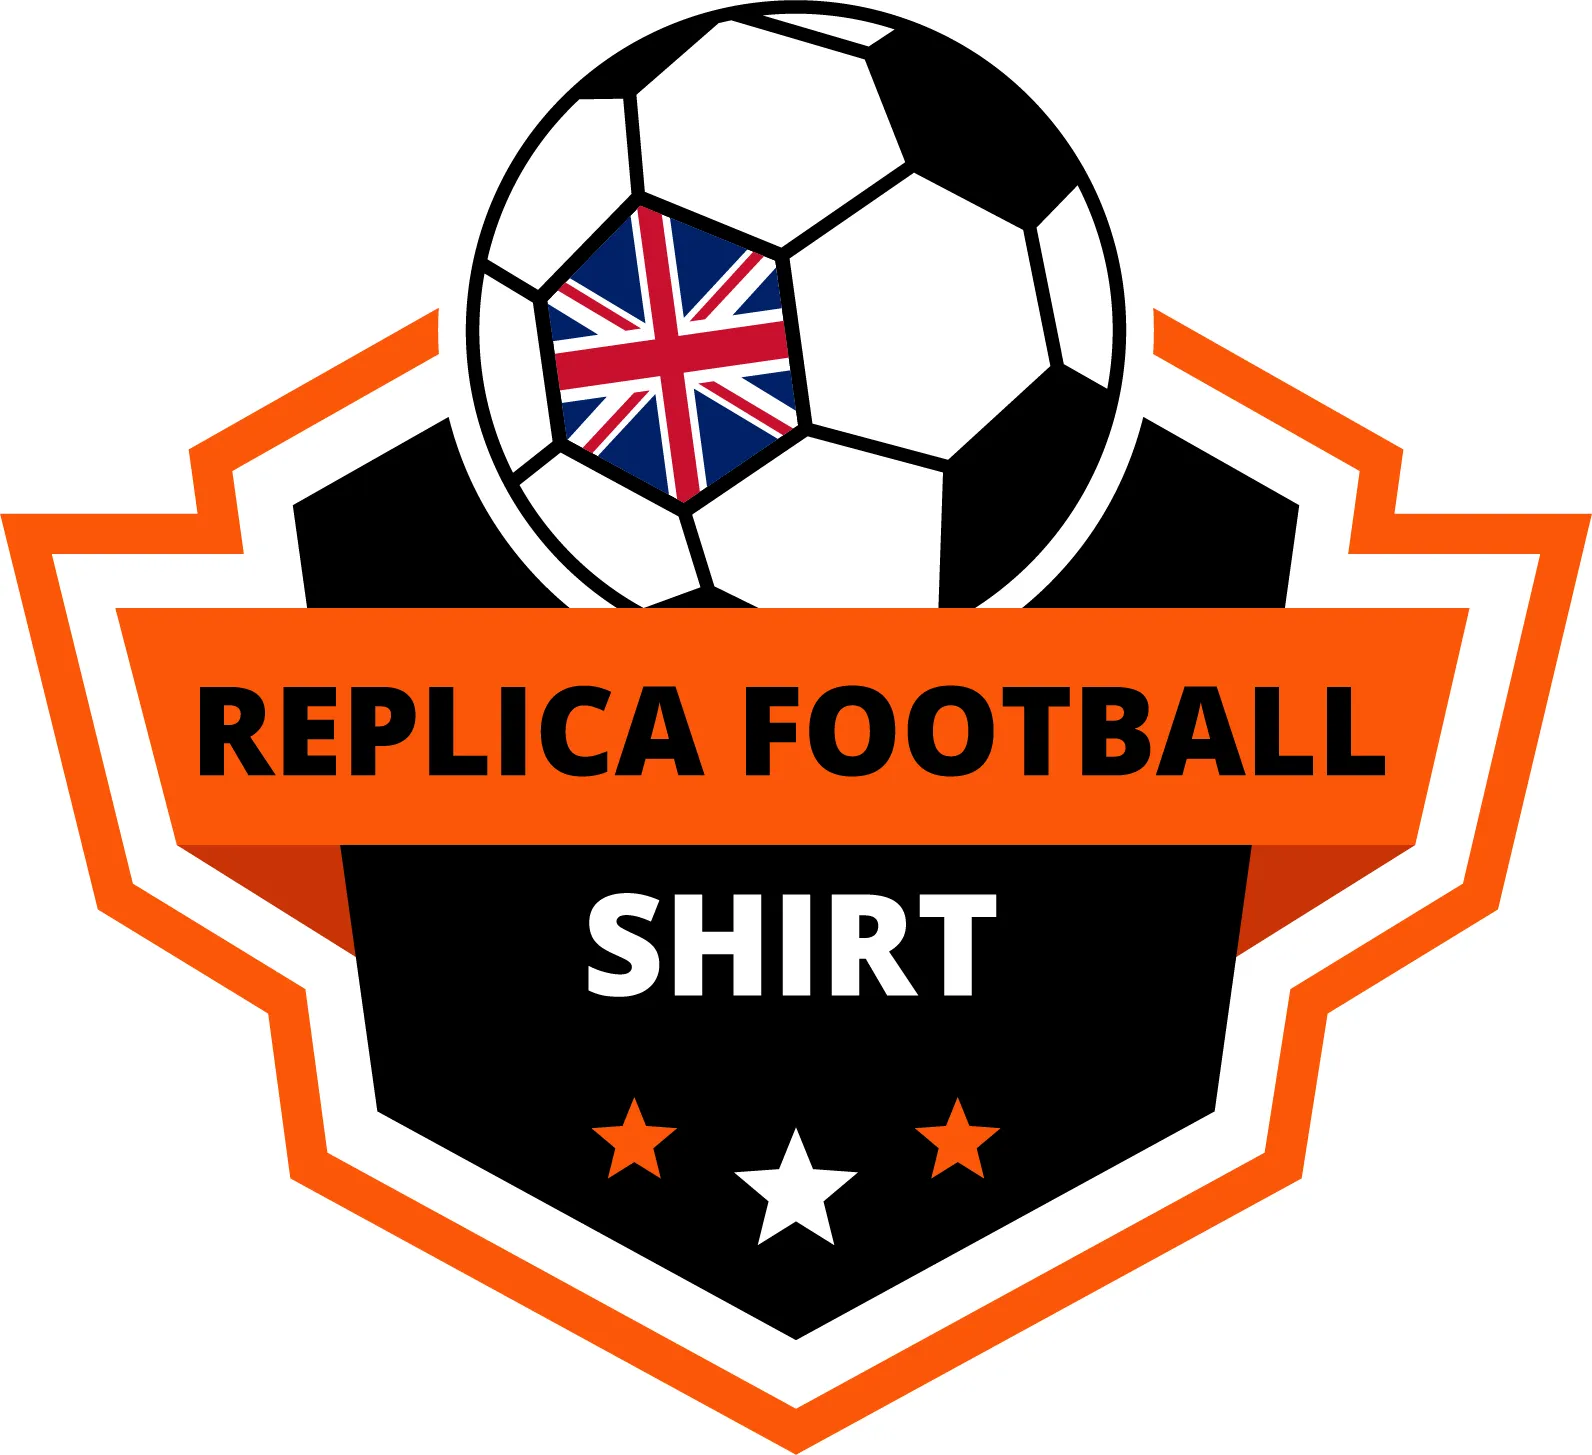 Replica Football Shirts Voucher Codes & Discount Codes